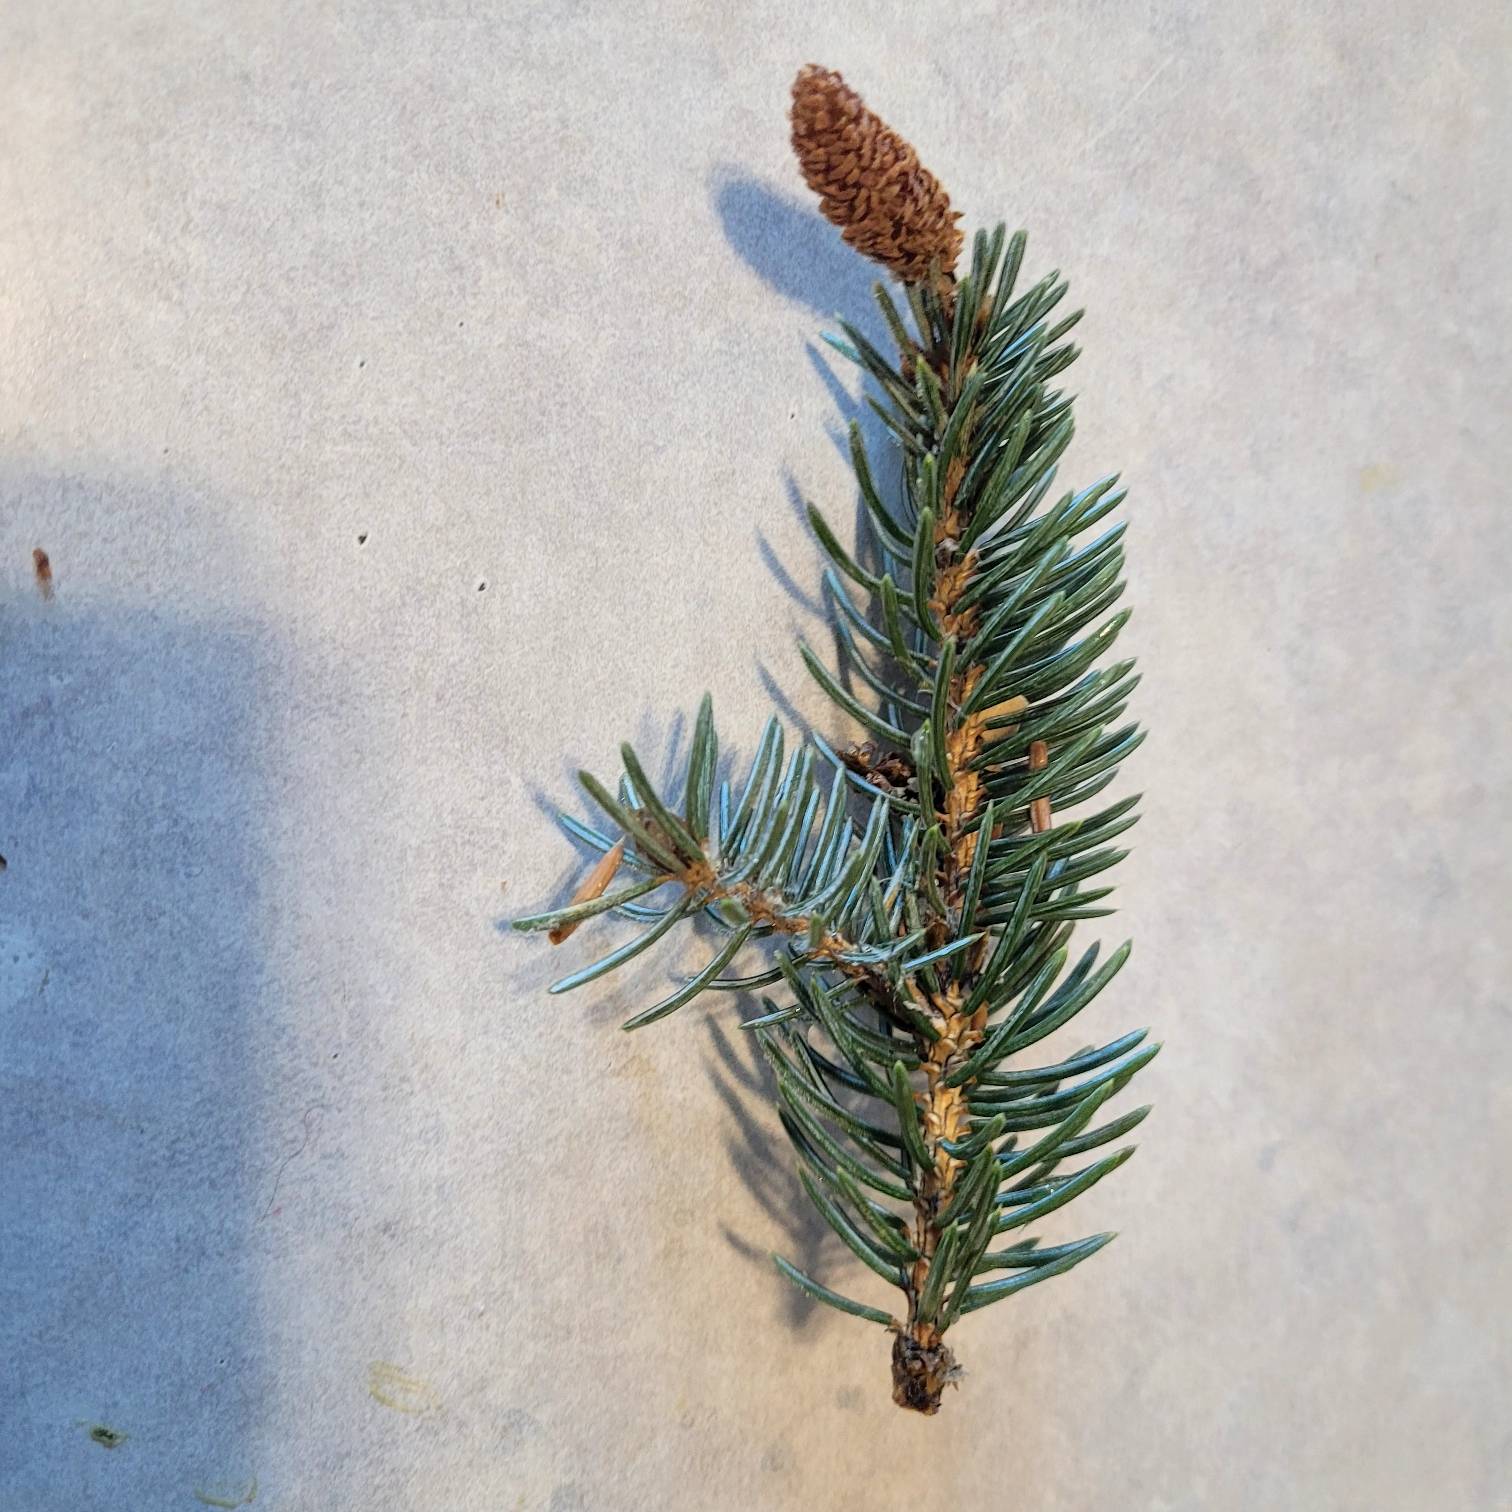 pine needle stem picked off branch